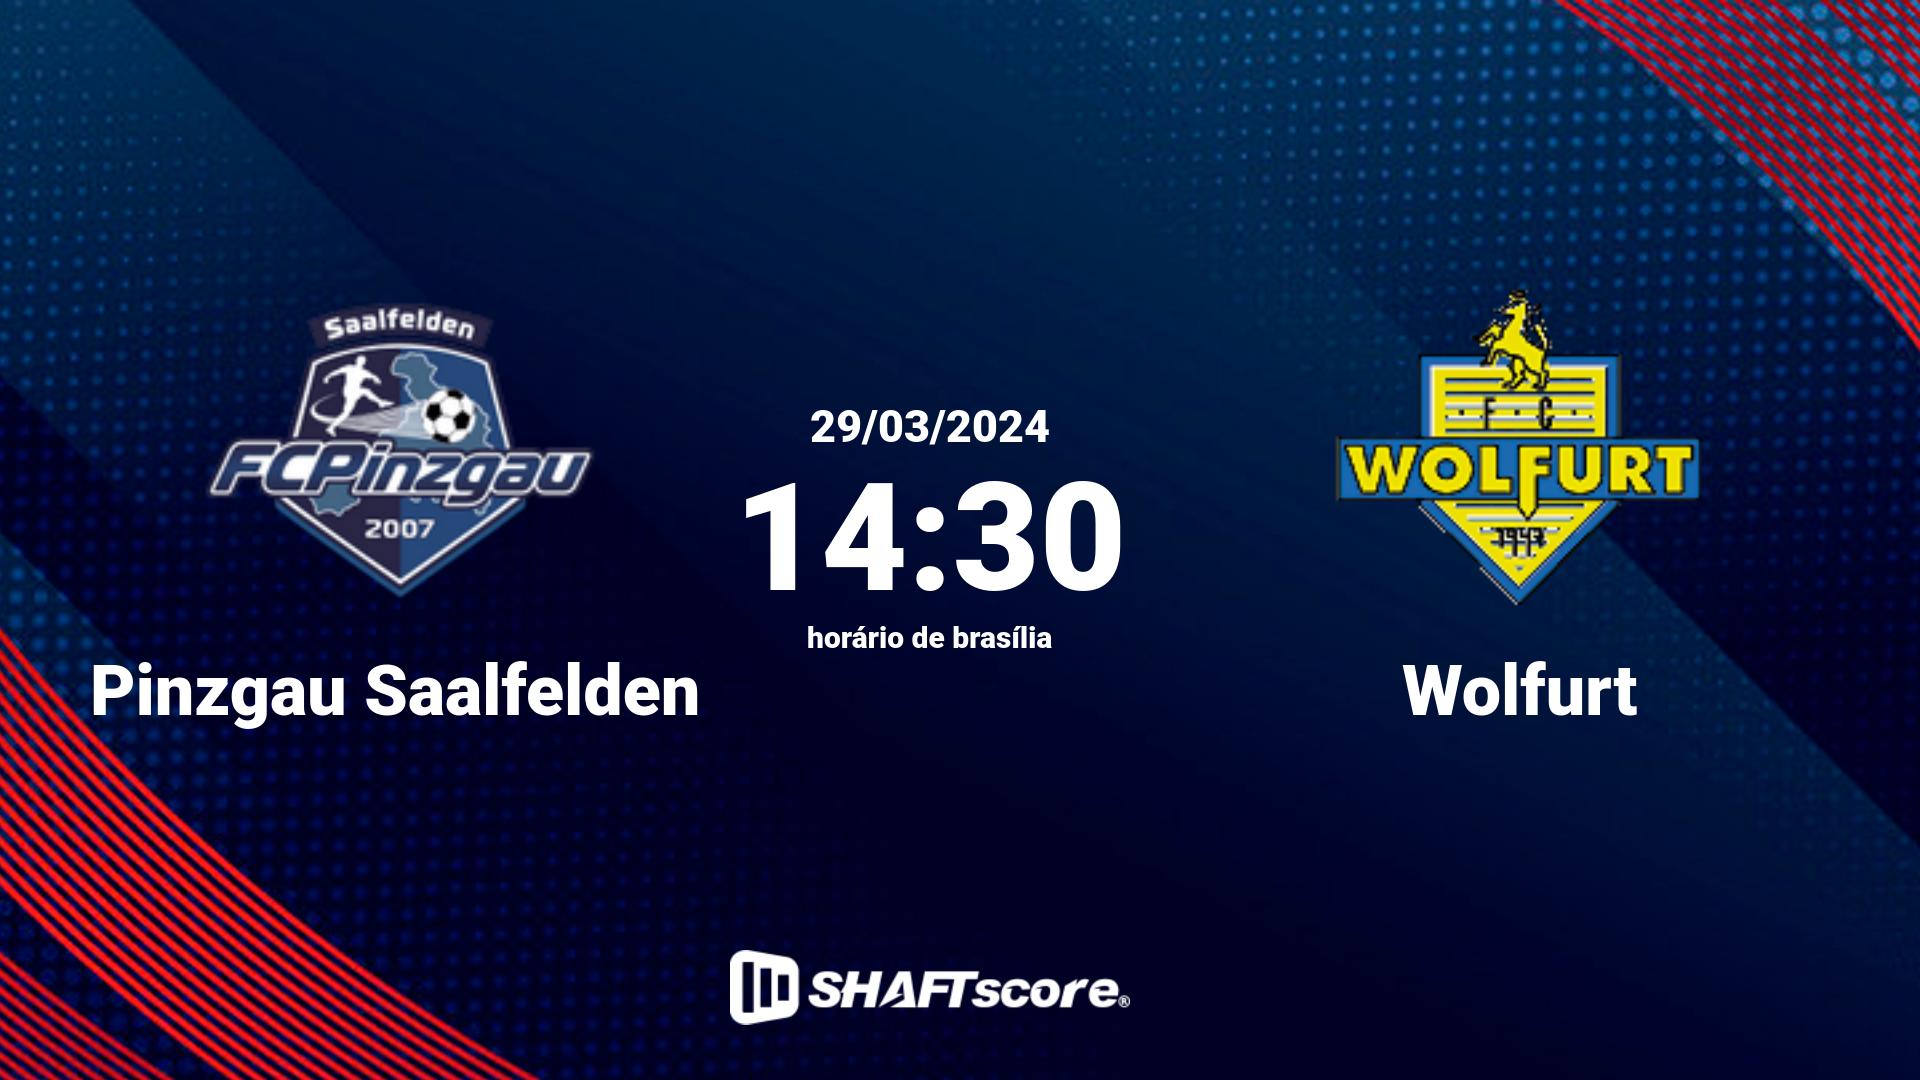 Estatísticas do jogo Pinzgau Saalfelden vs Wolfurt 29.03 14:30